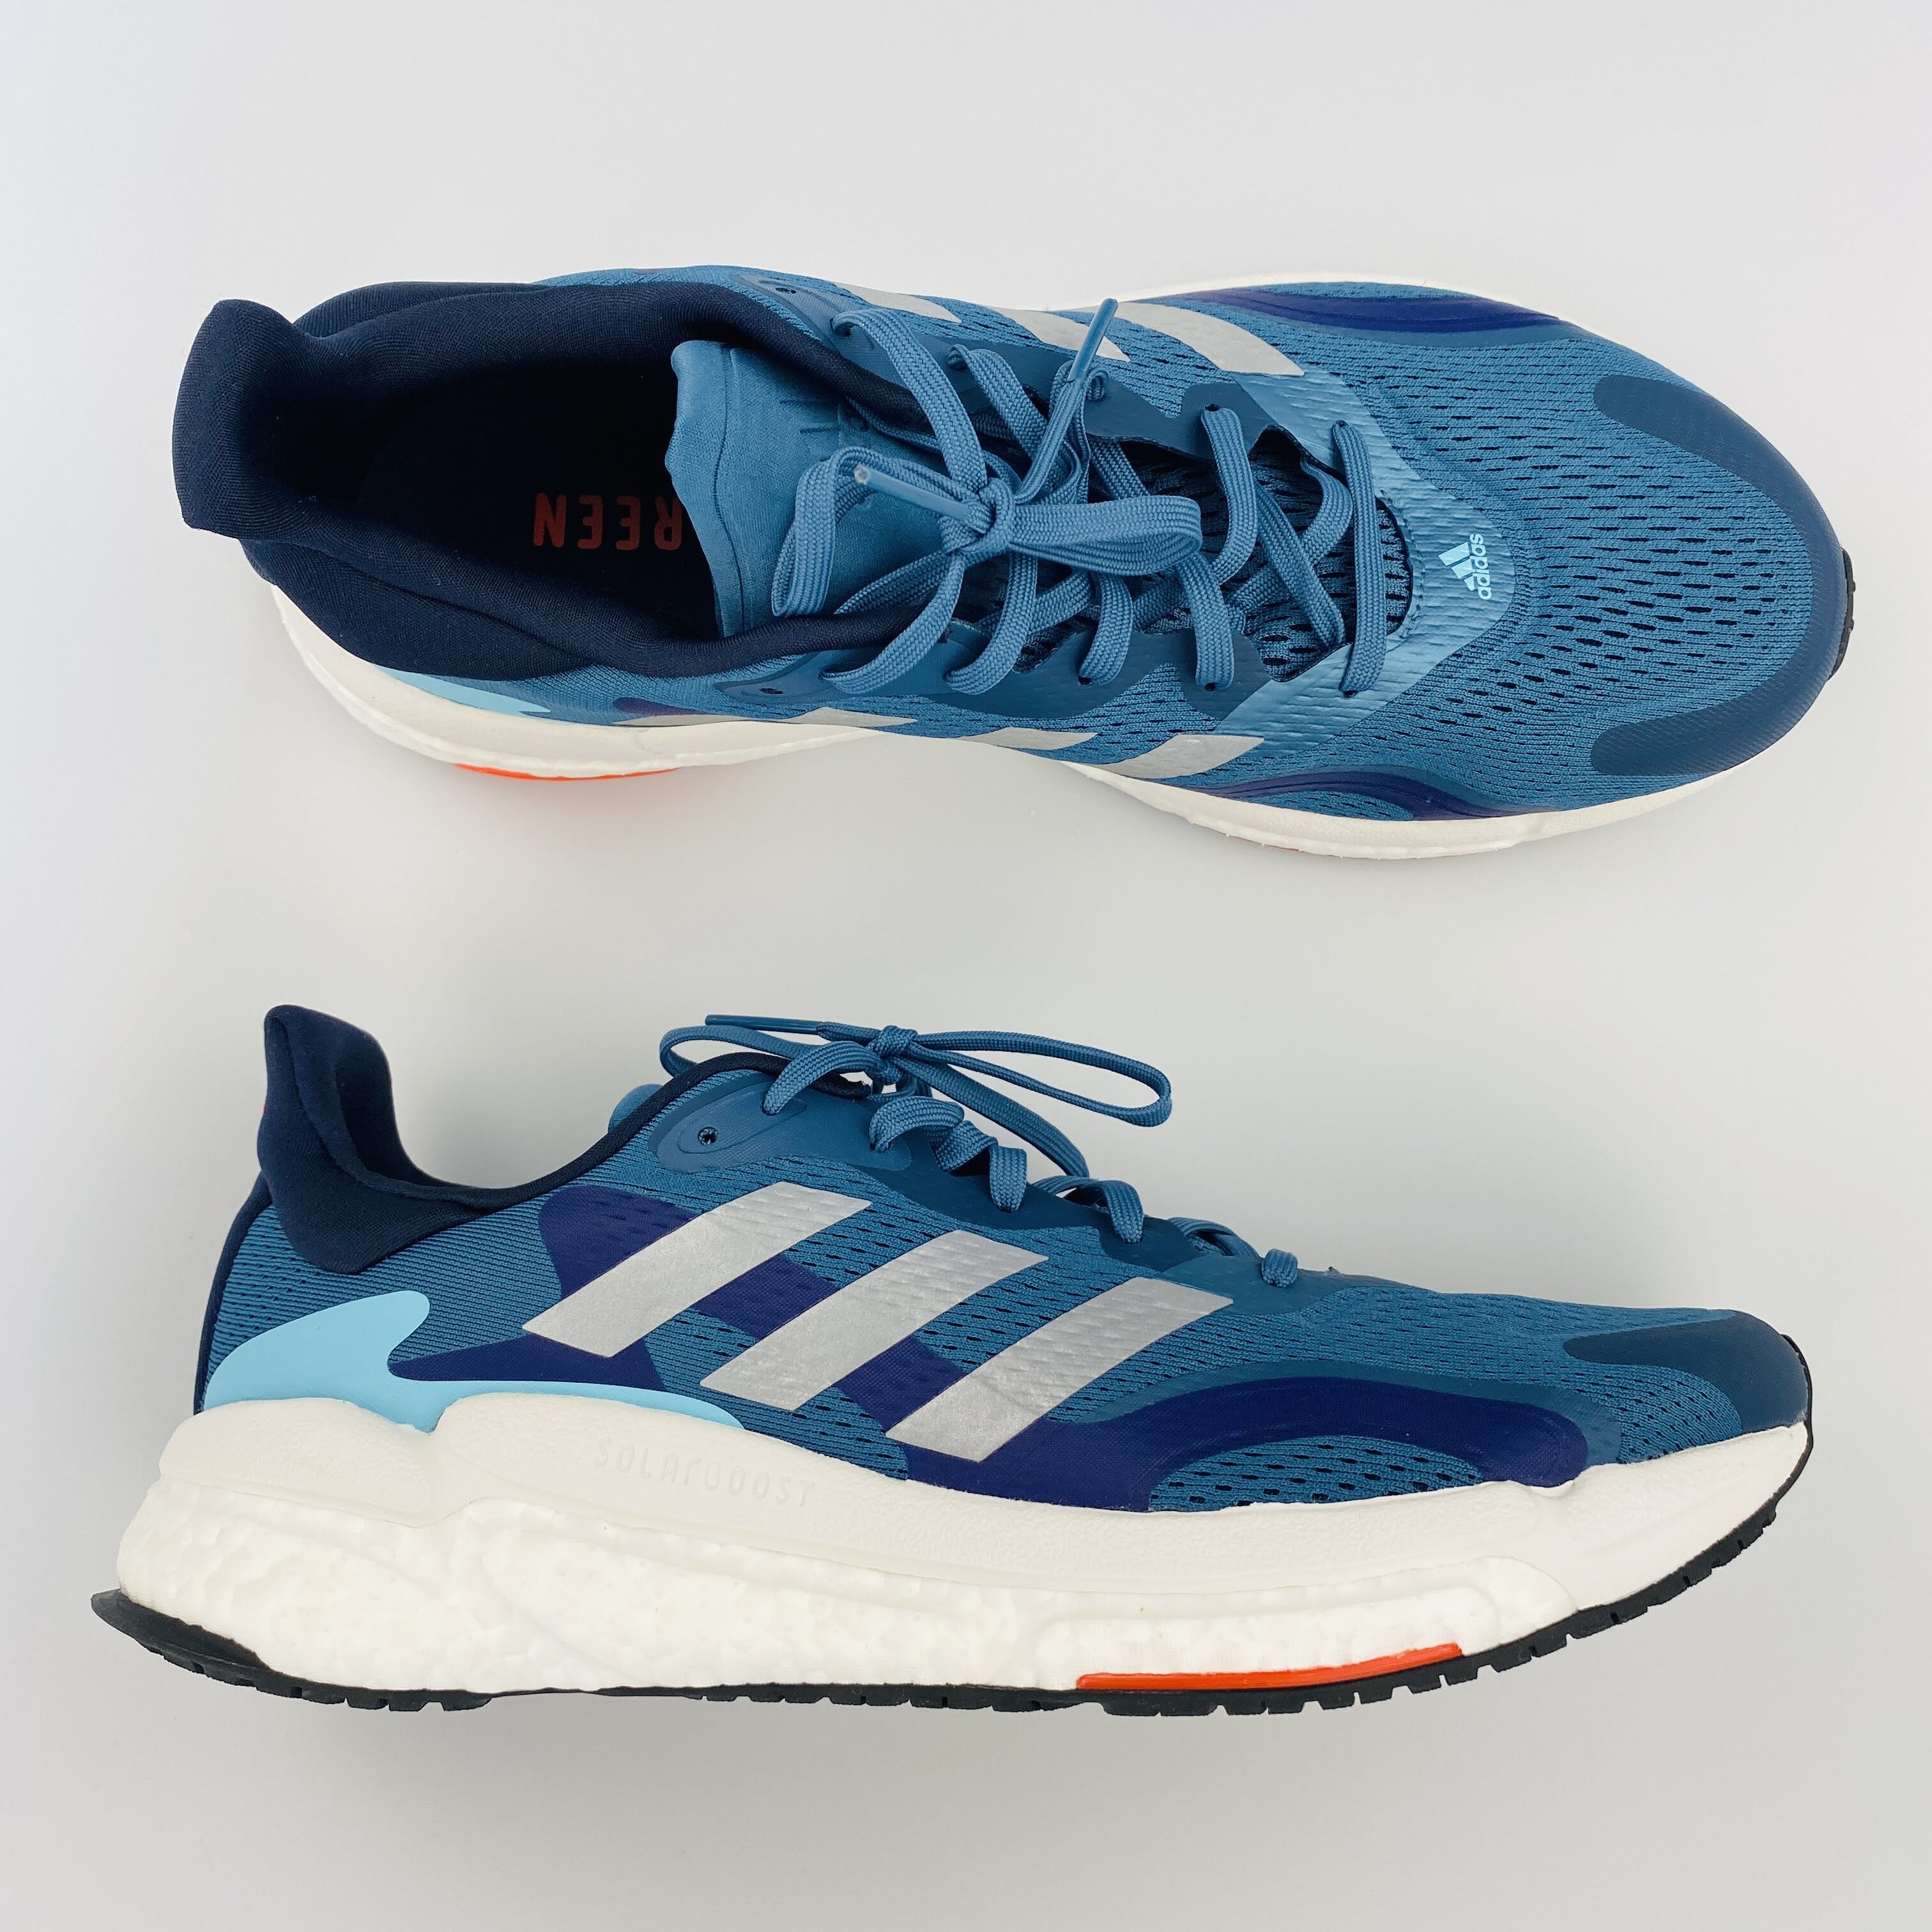 Adidas Solar Boost 3M - Seconde main Chaussures running homme - Bleu  pétrole - 44.2/3